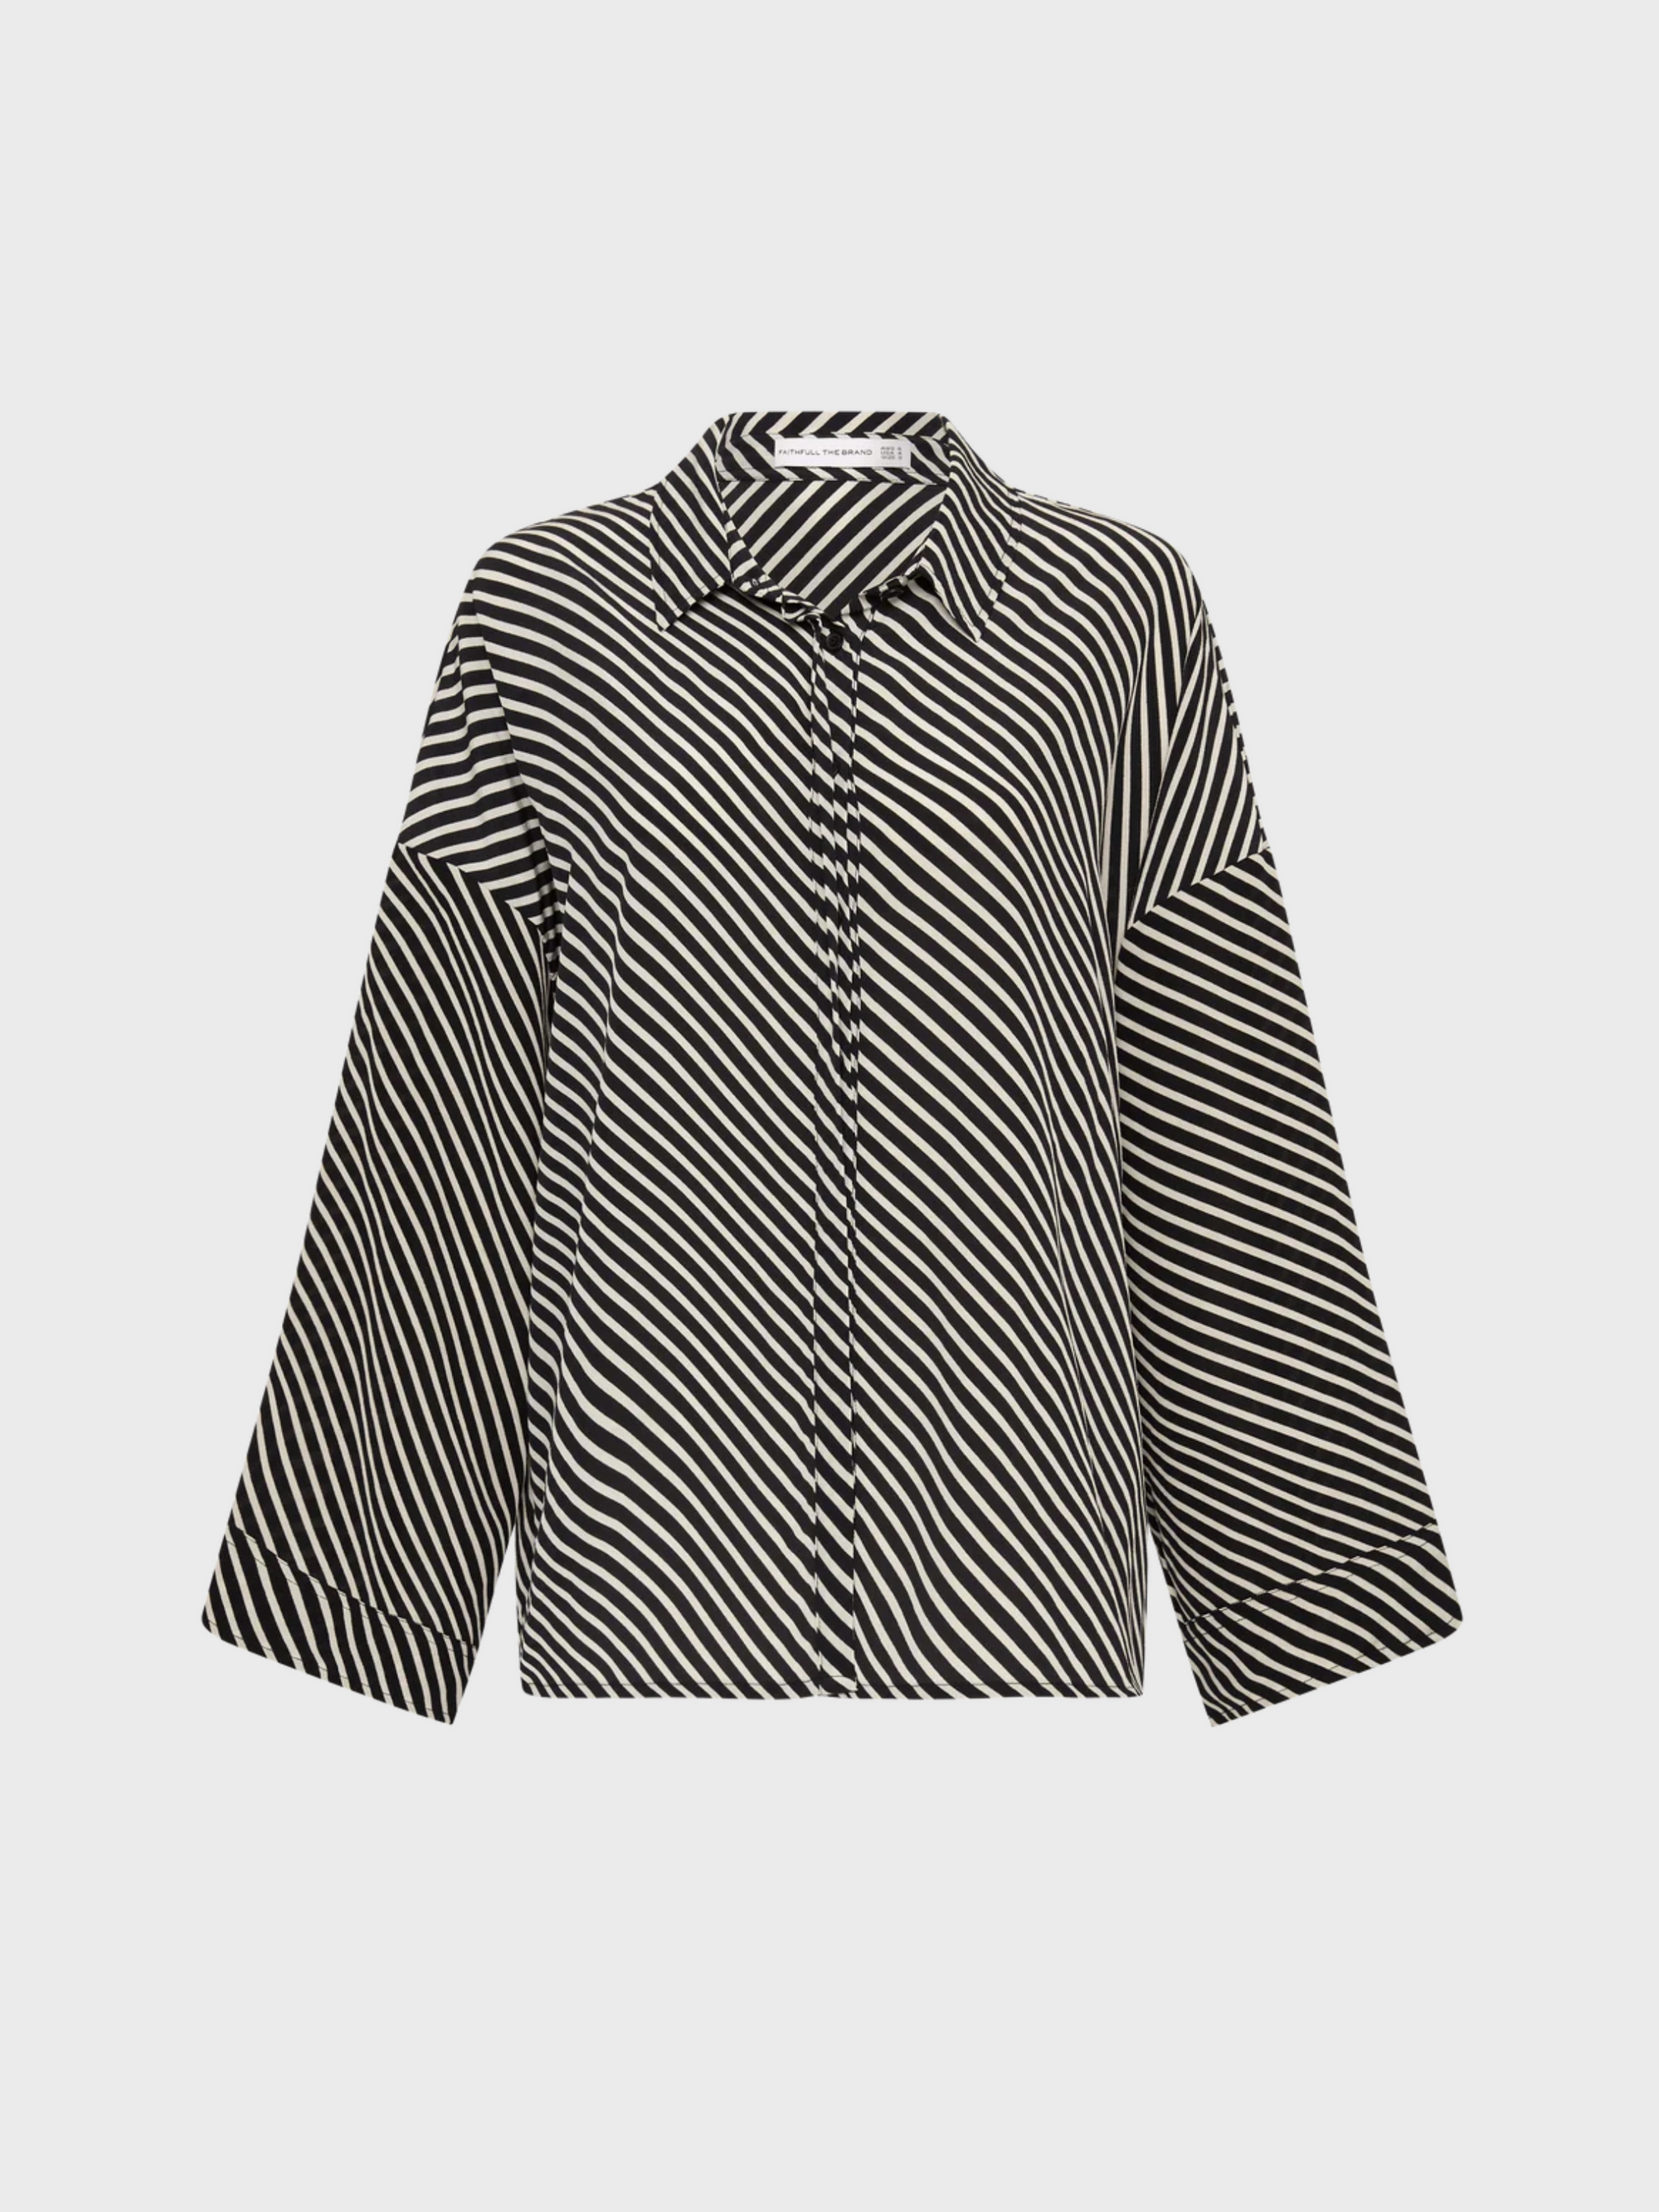 Faithfull Amici Shirt Toscano Stripe Black-Shirts-West of Woodward Boutique-Vancouver-Canada